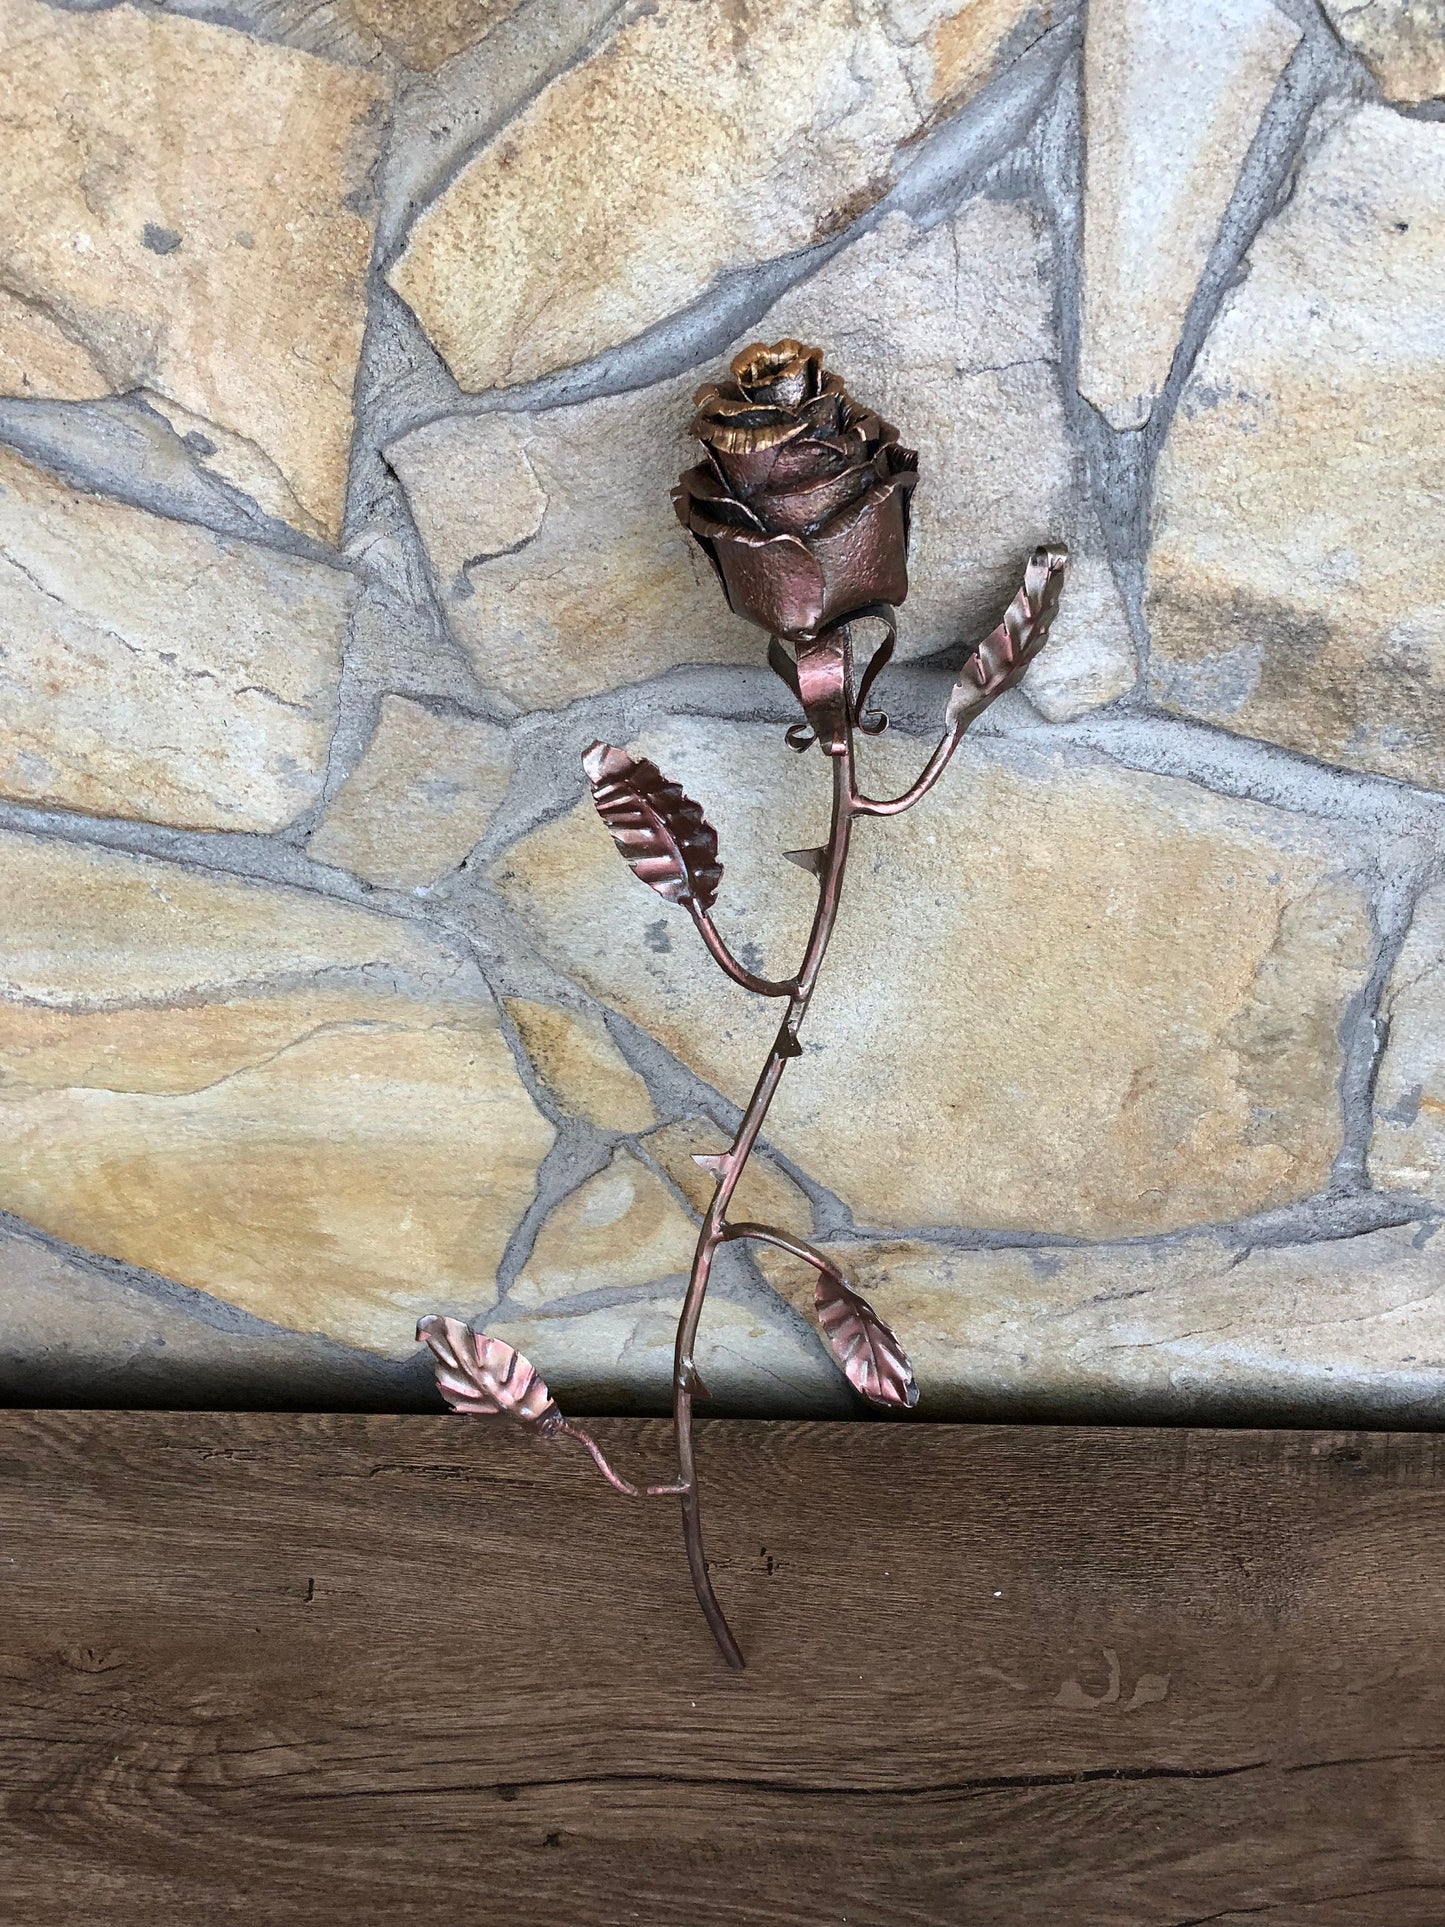 Wrought iron rose, hand made rose, metal rose, steel rose, iron rose, metal rose sculpture, metal rose gift, metal gift for her, forging art